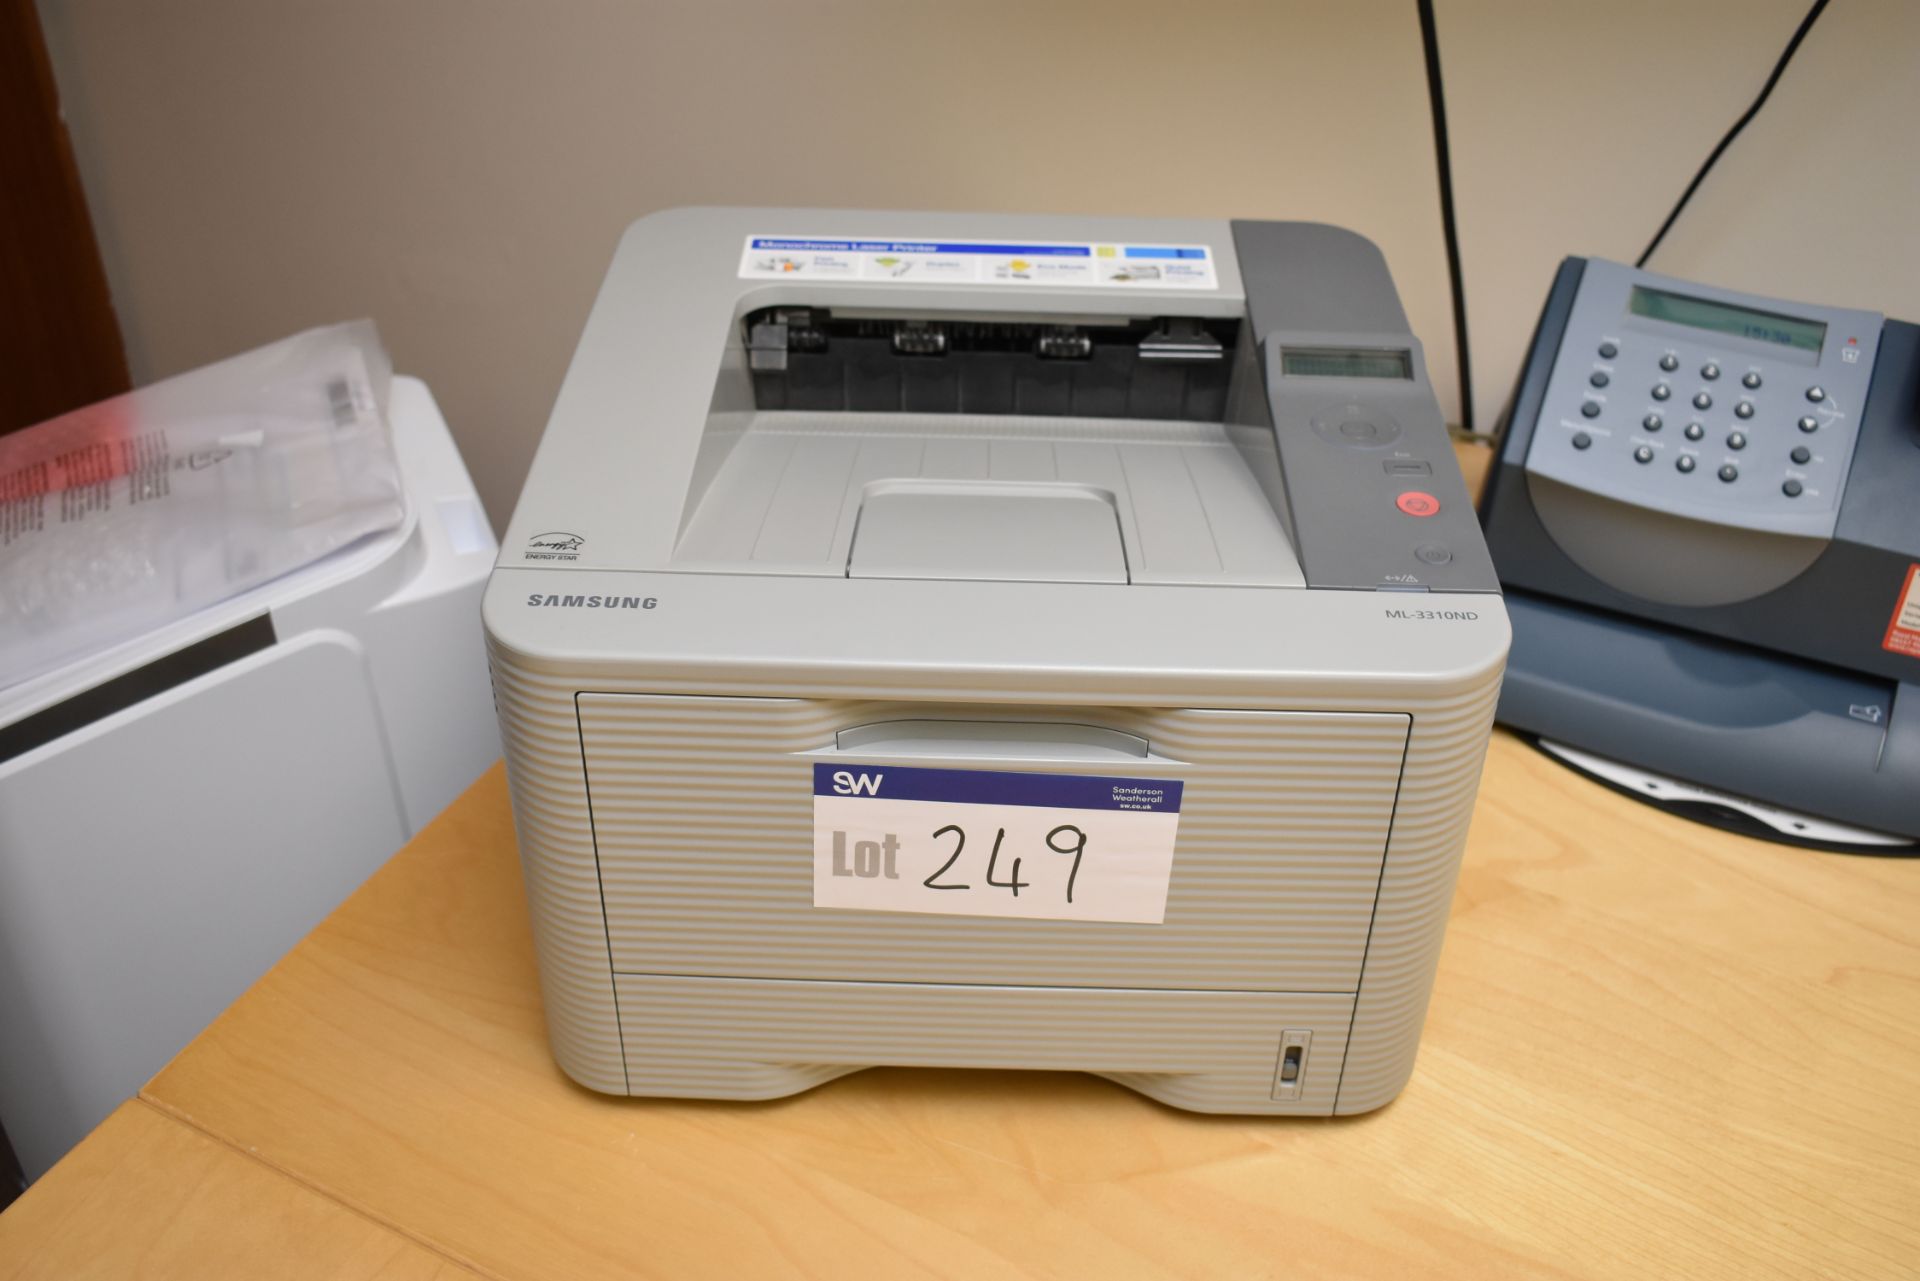 Samsung ML-3310nd Printer